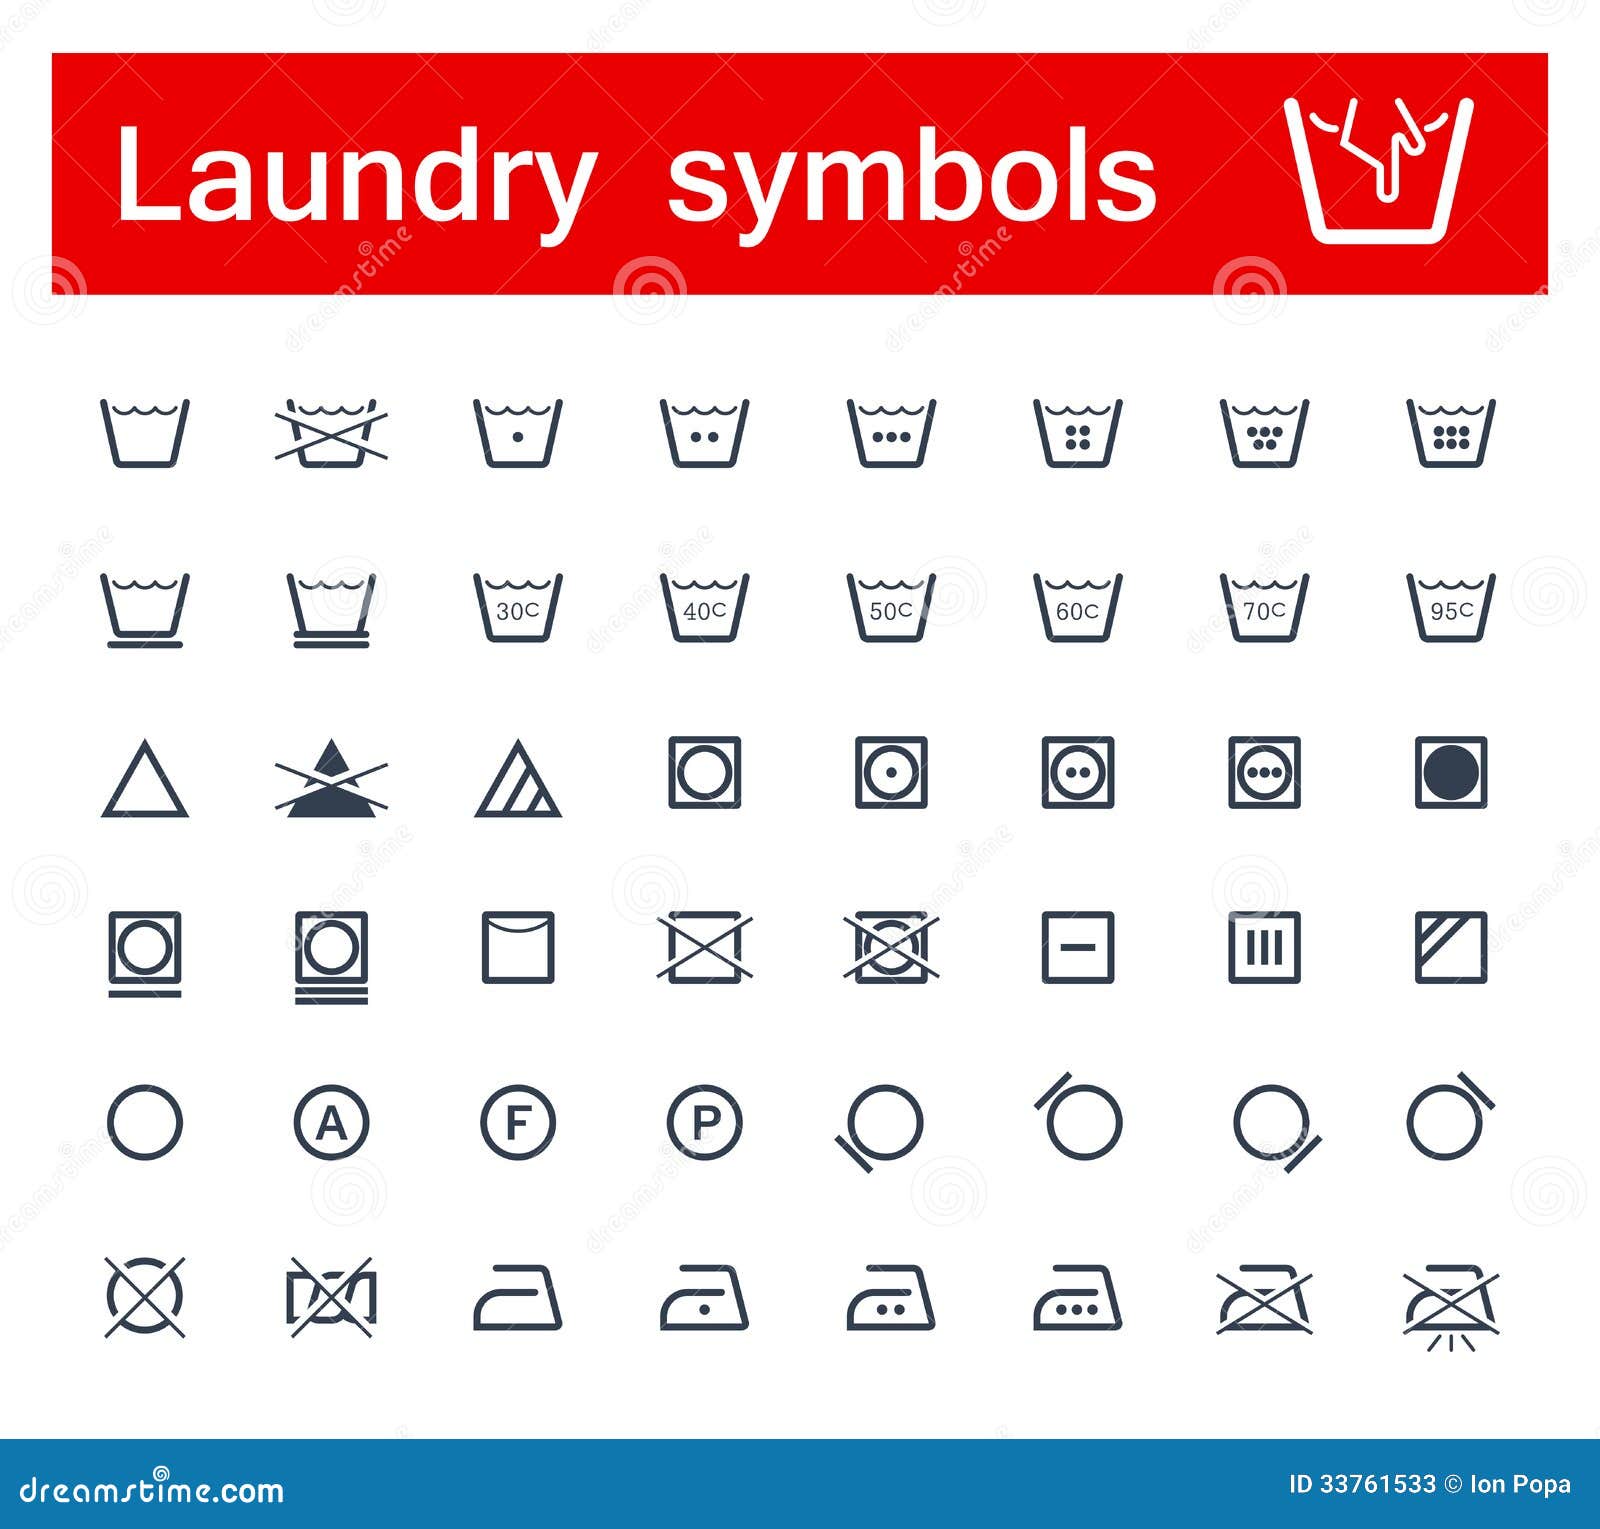 Washing Symbols Vector Free